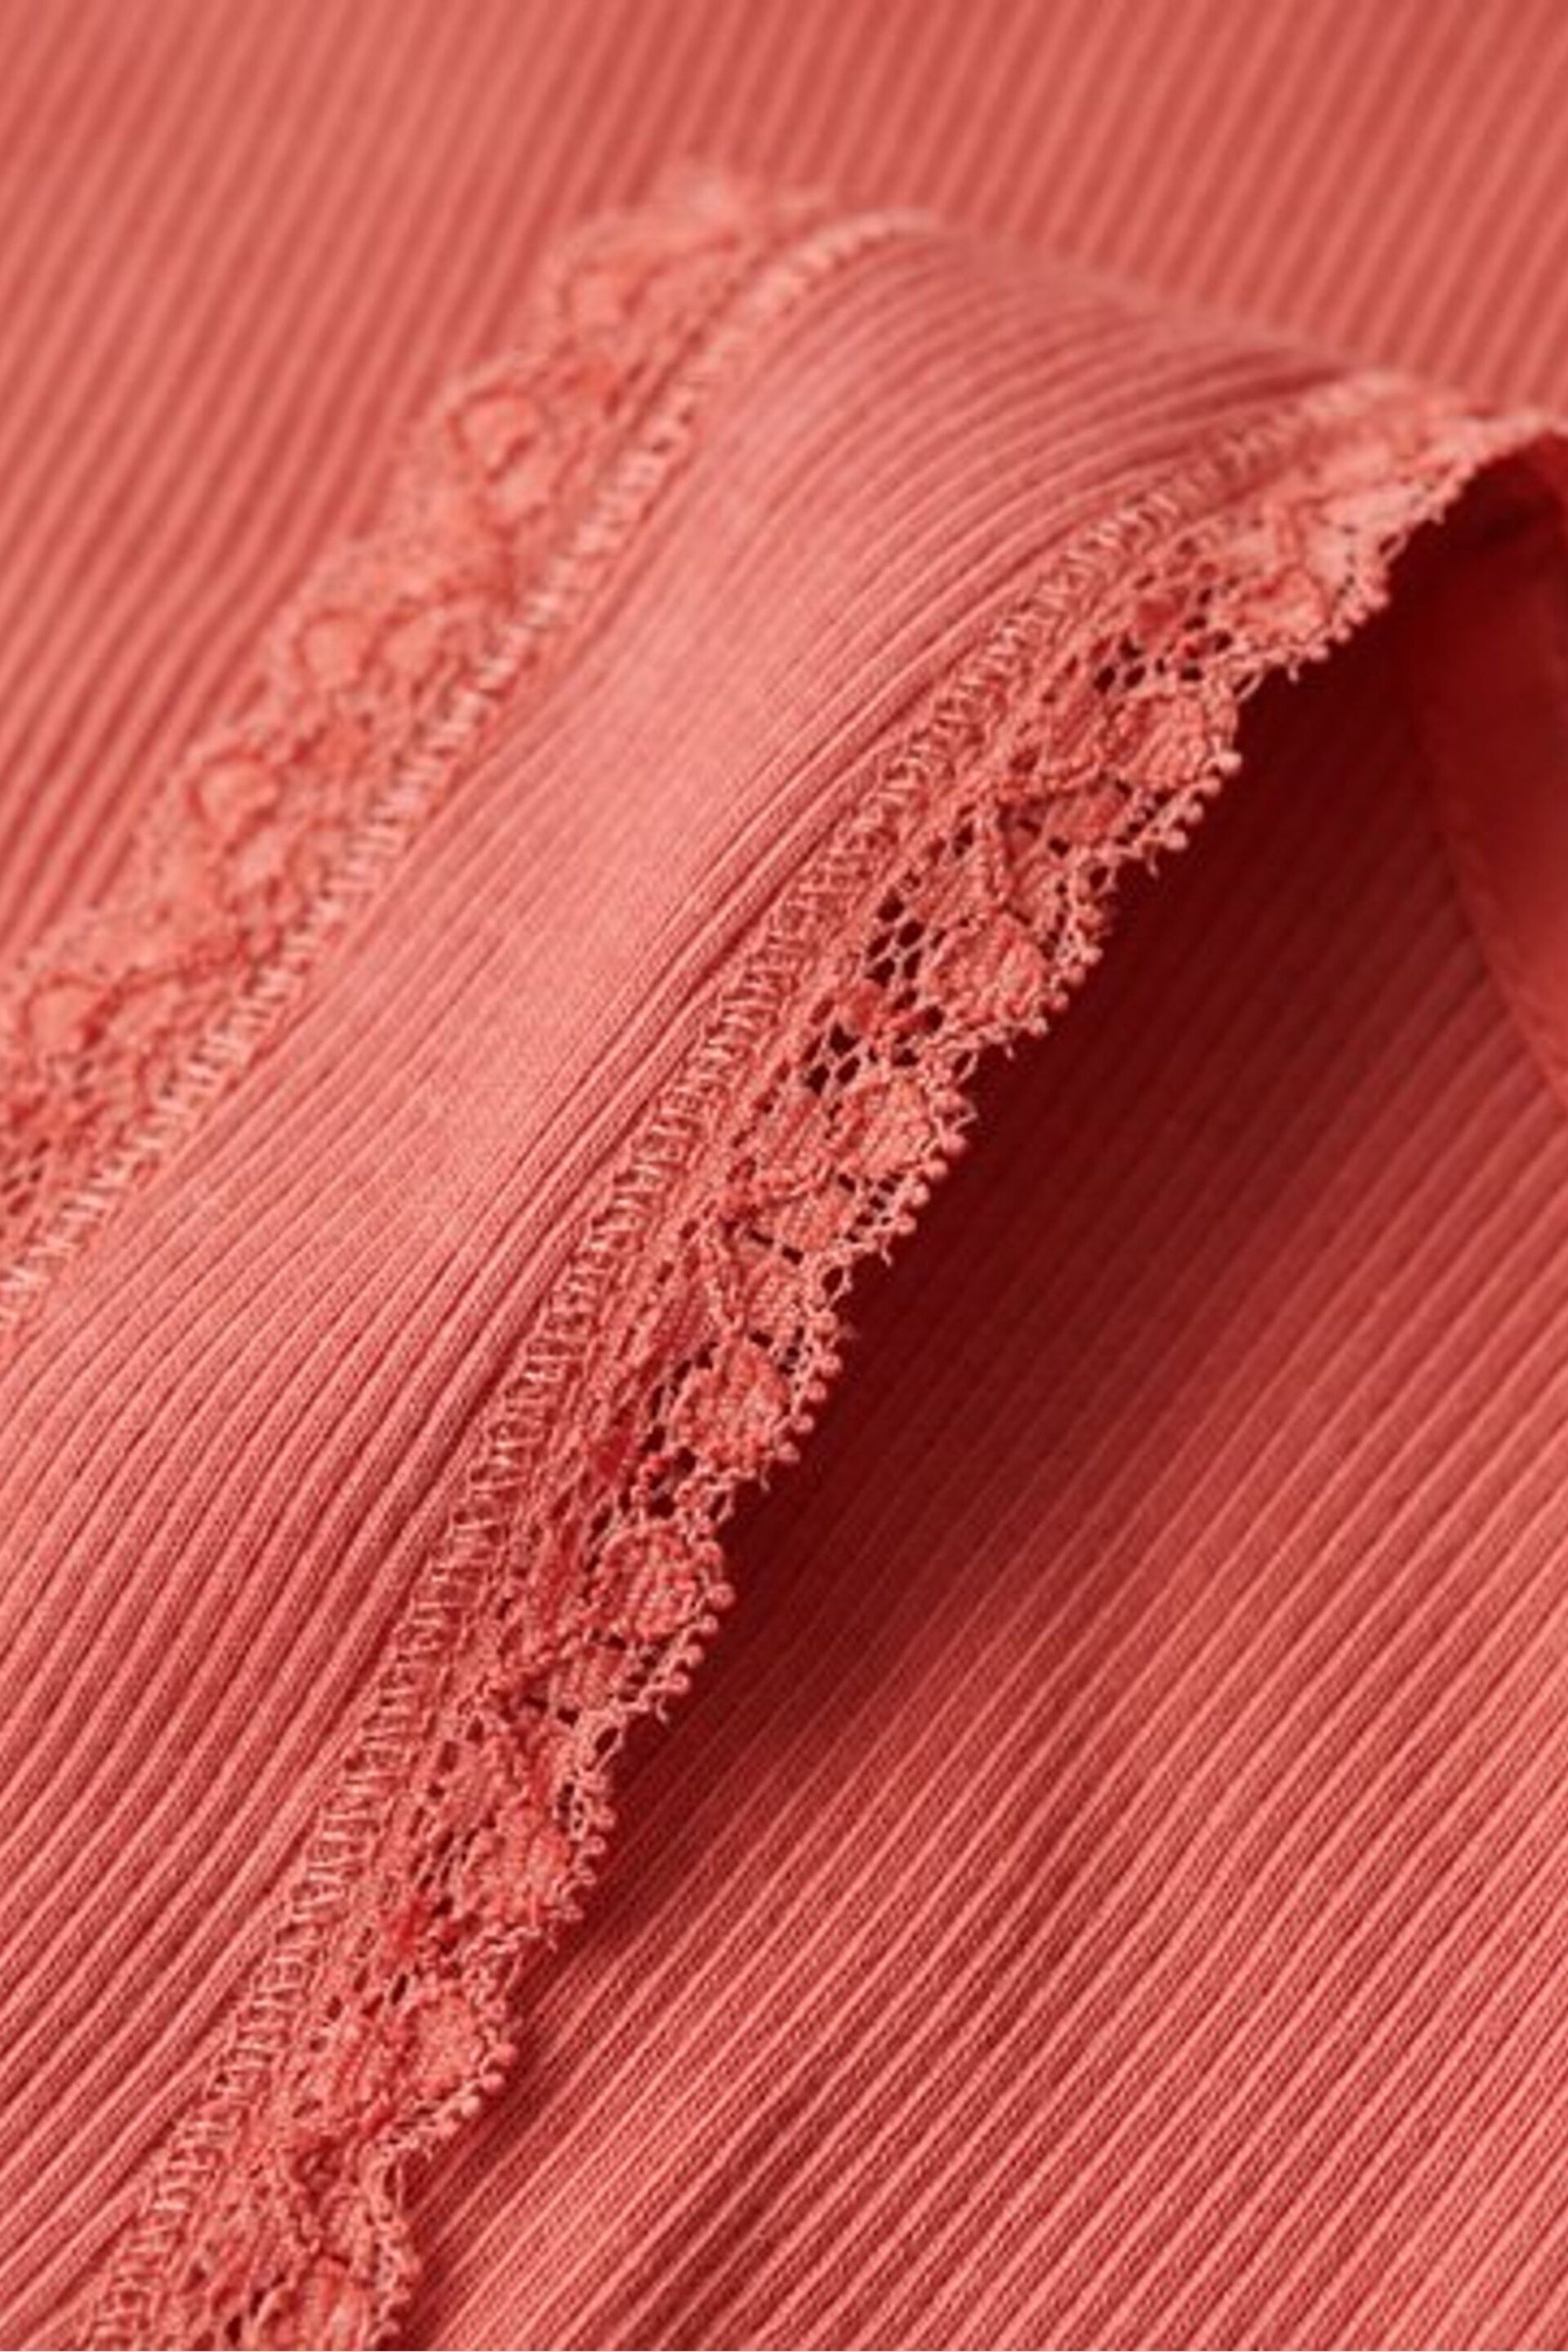 Superdry Red Cotton Vintage Lace Trim Vest Top - Image 6 of 6